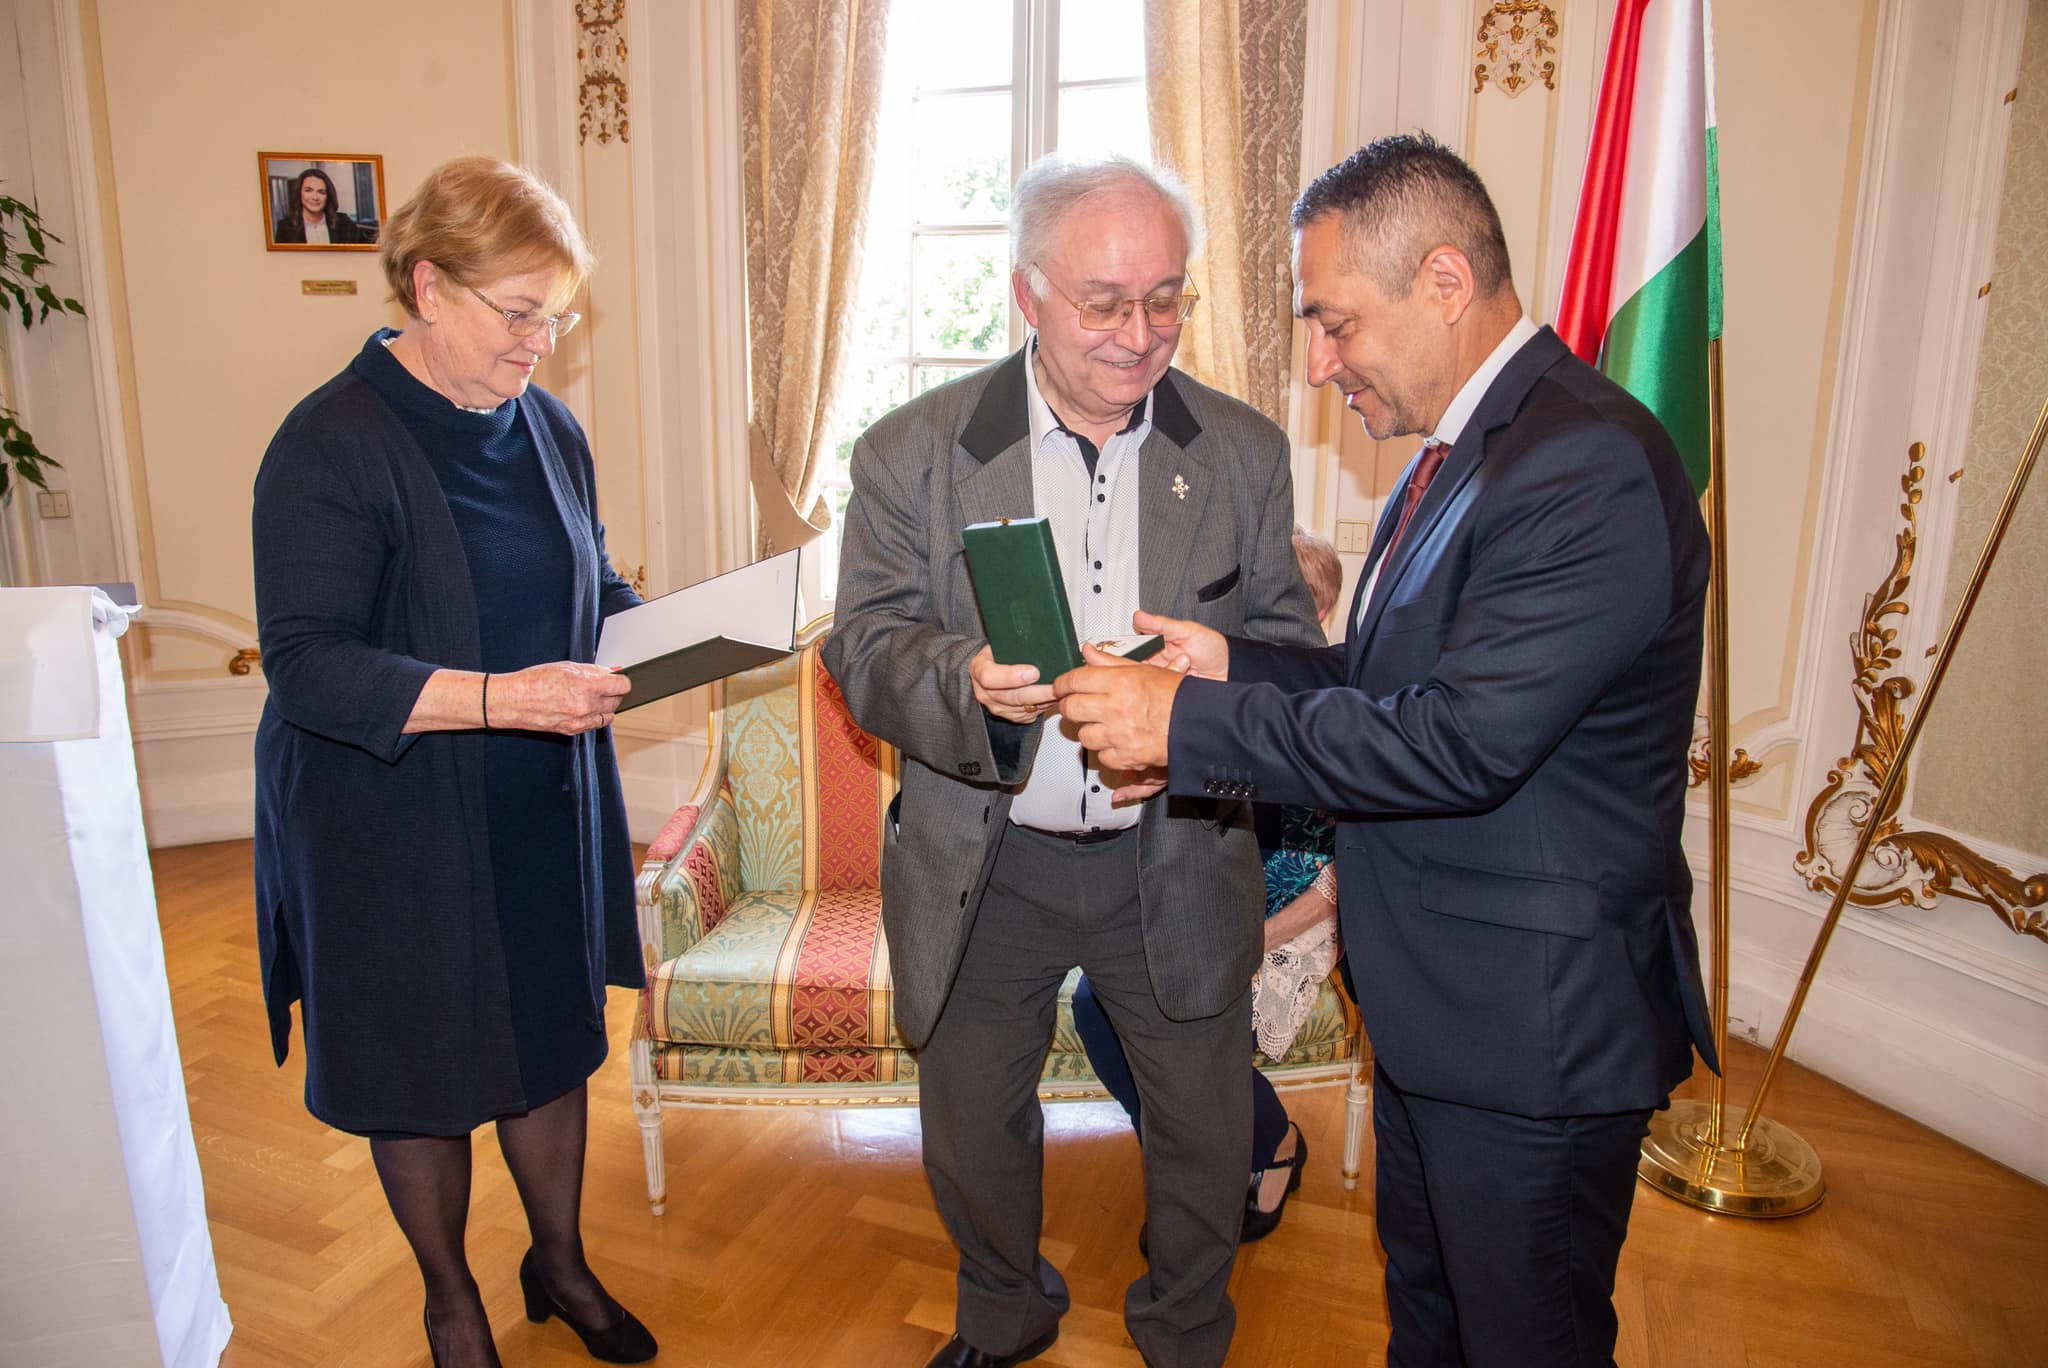 Physicist Professor, Member of the Friends of Hungary Foundation, Awarded Order of Merit